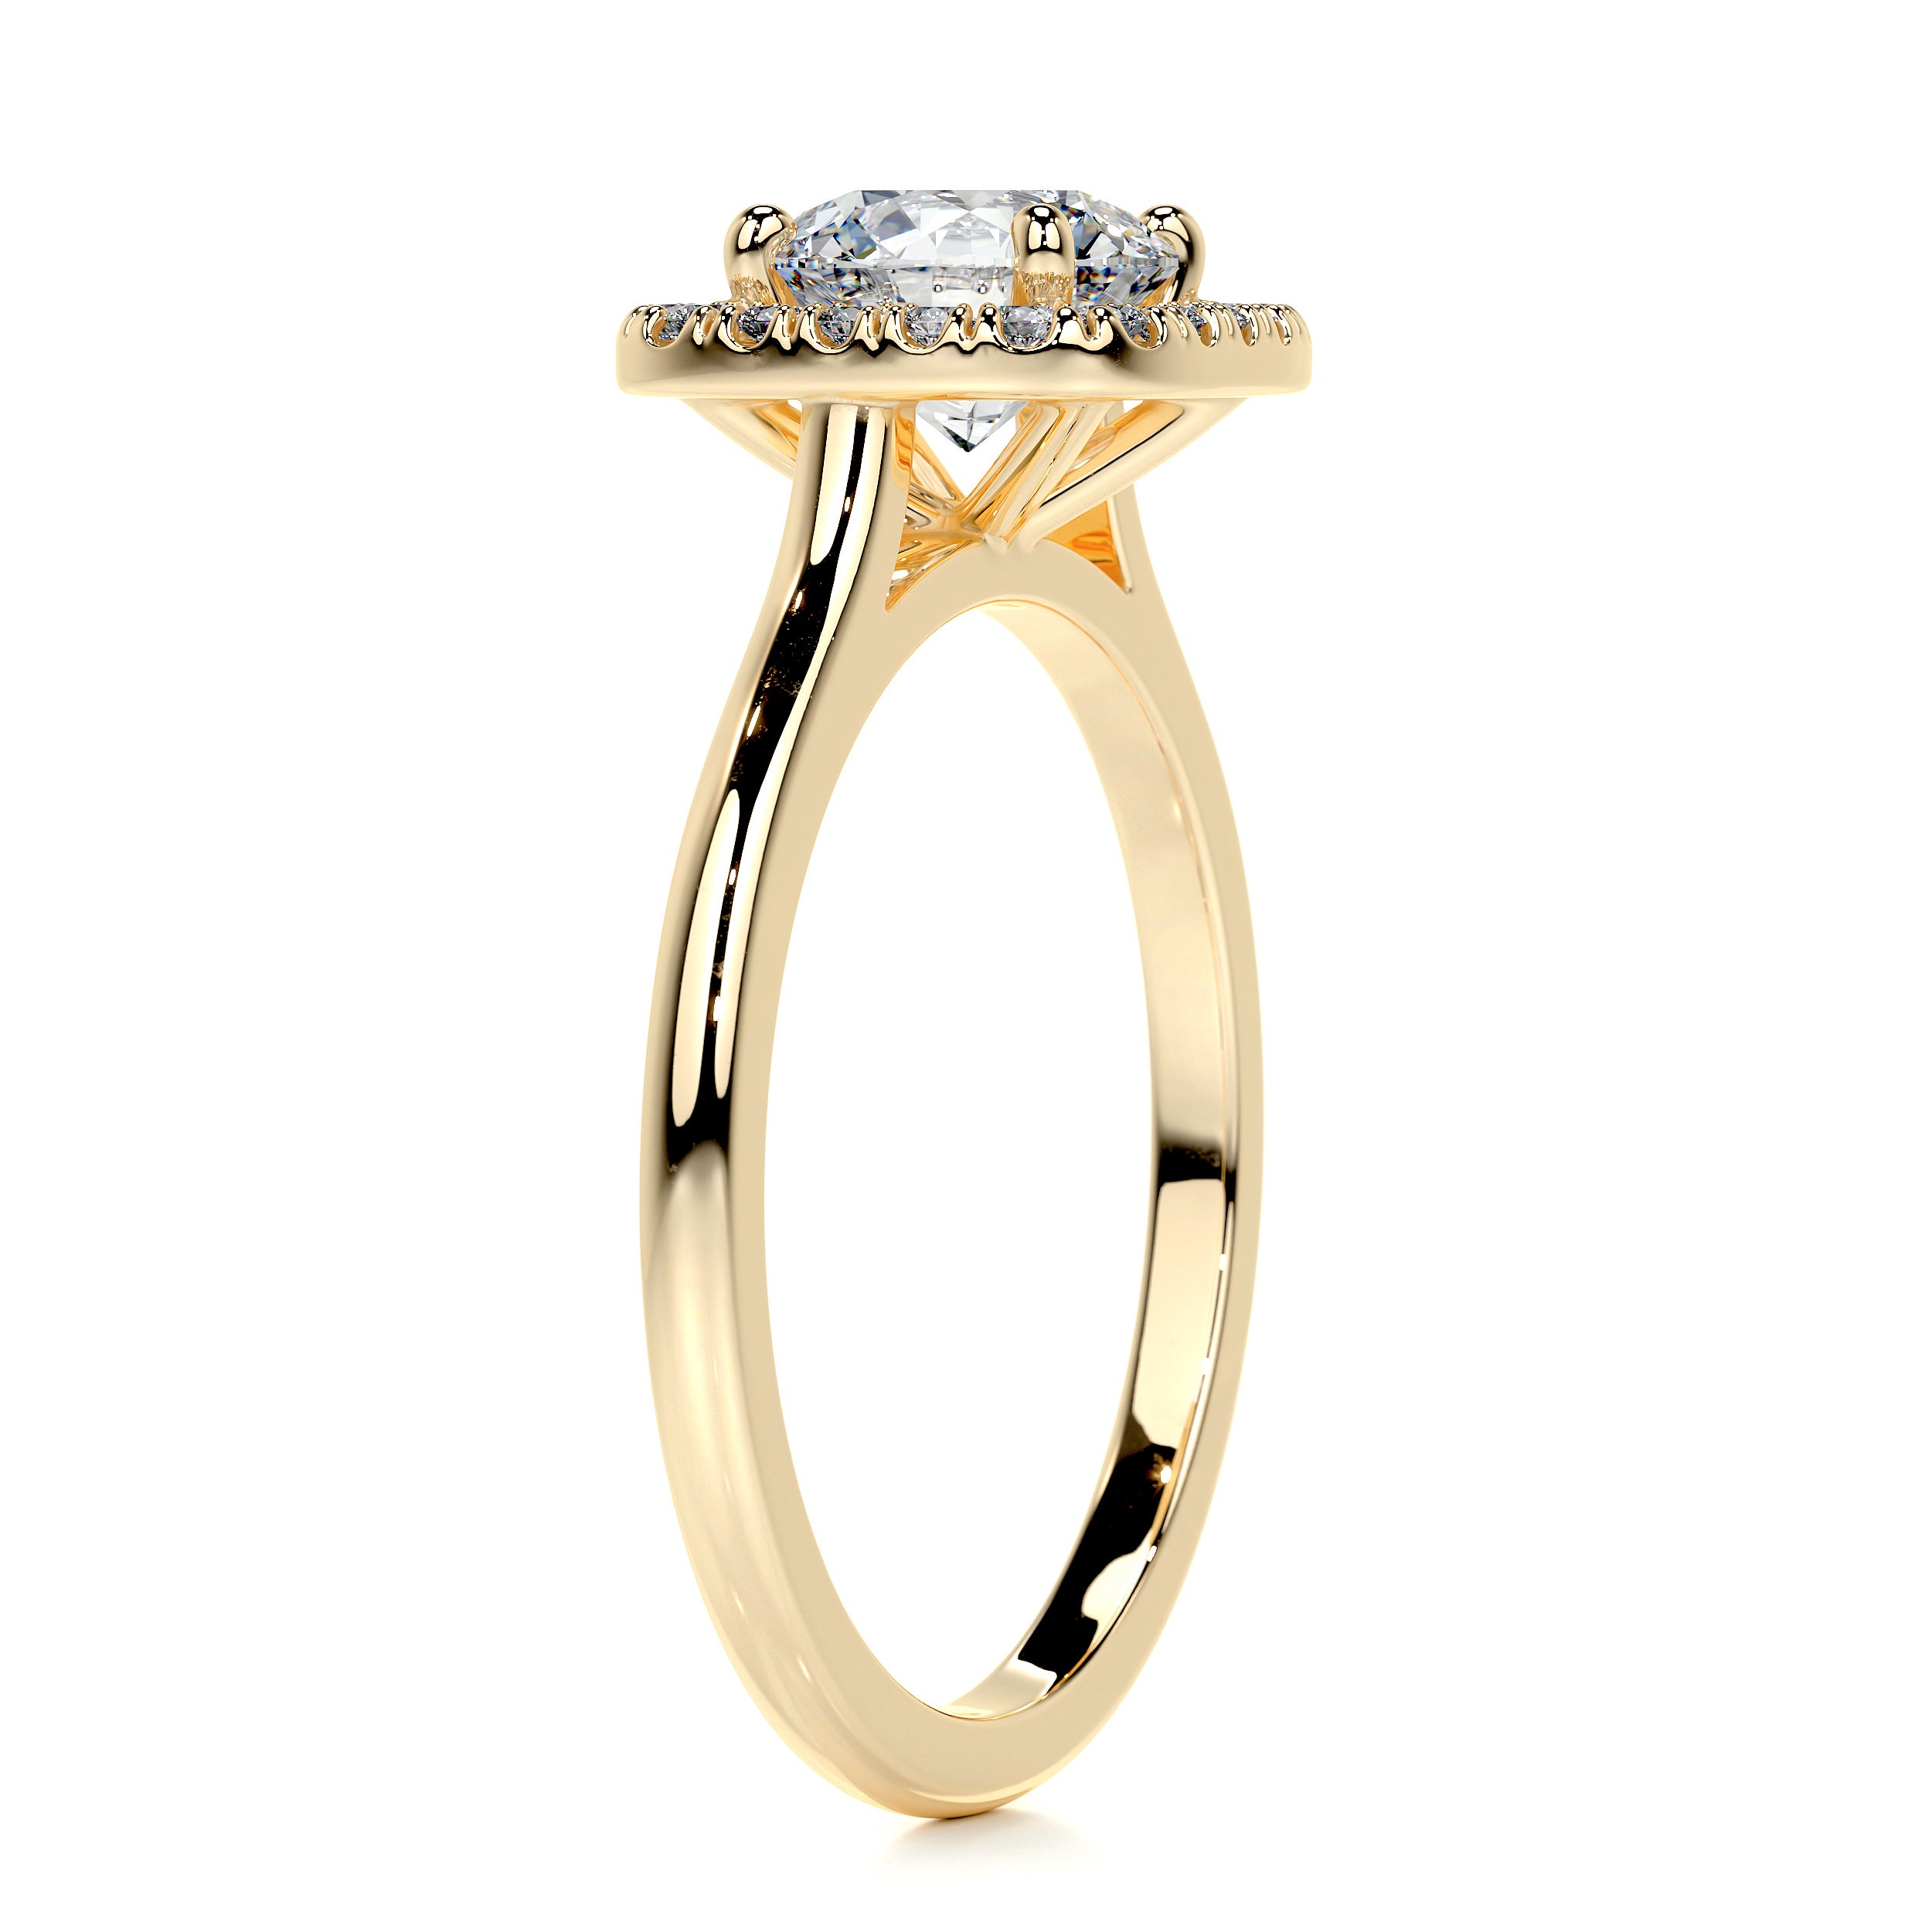 Claudia Diamond Engagement Ring   (1.15 Carat) -18K Yellow Gold